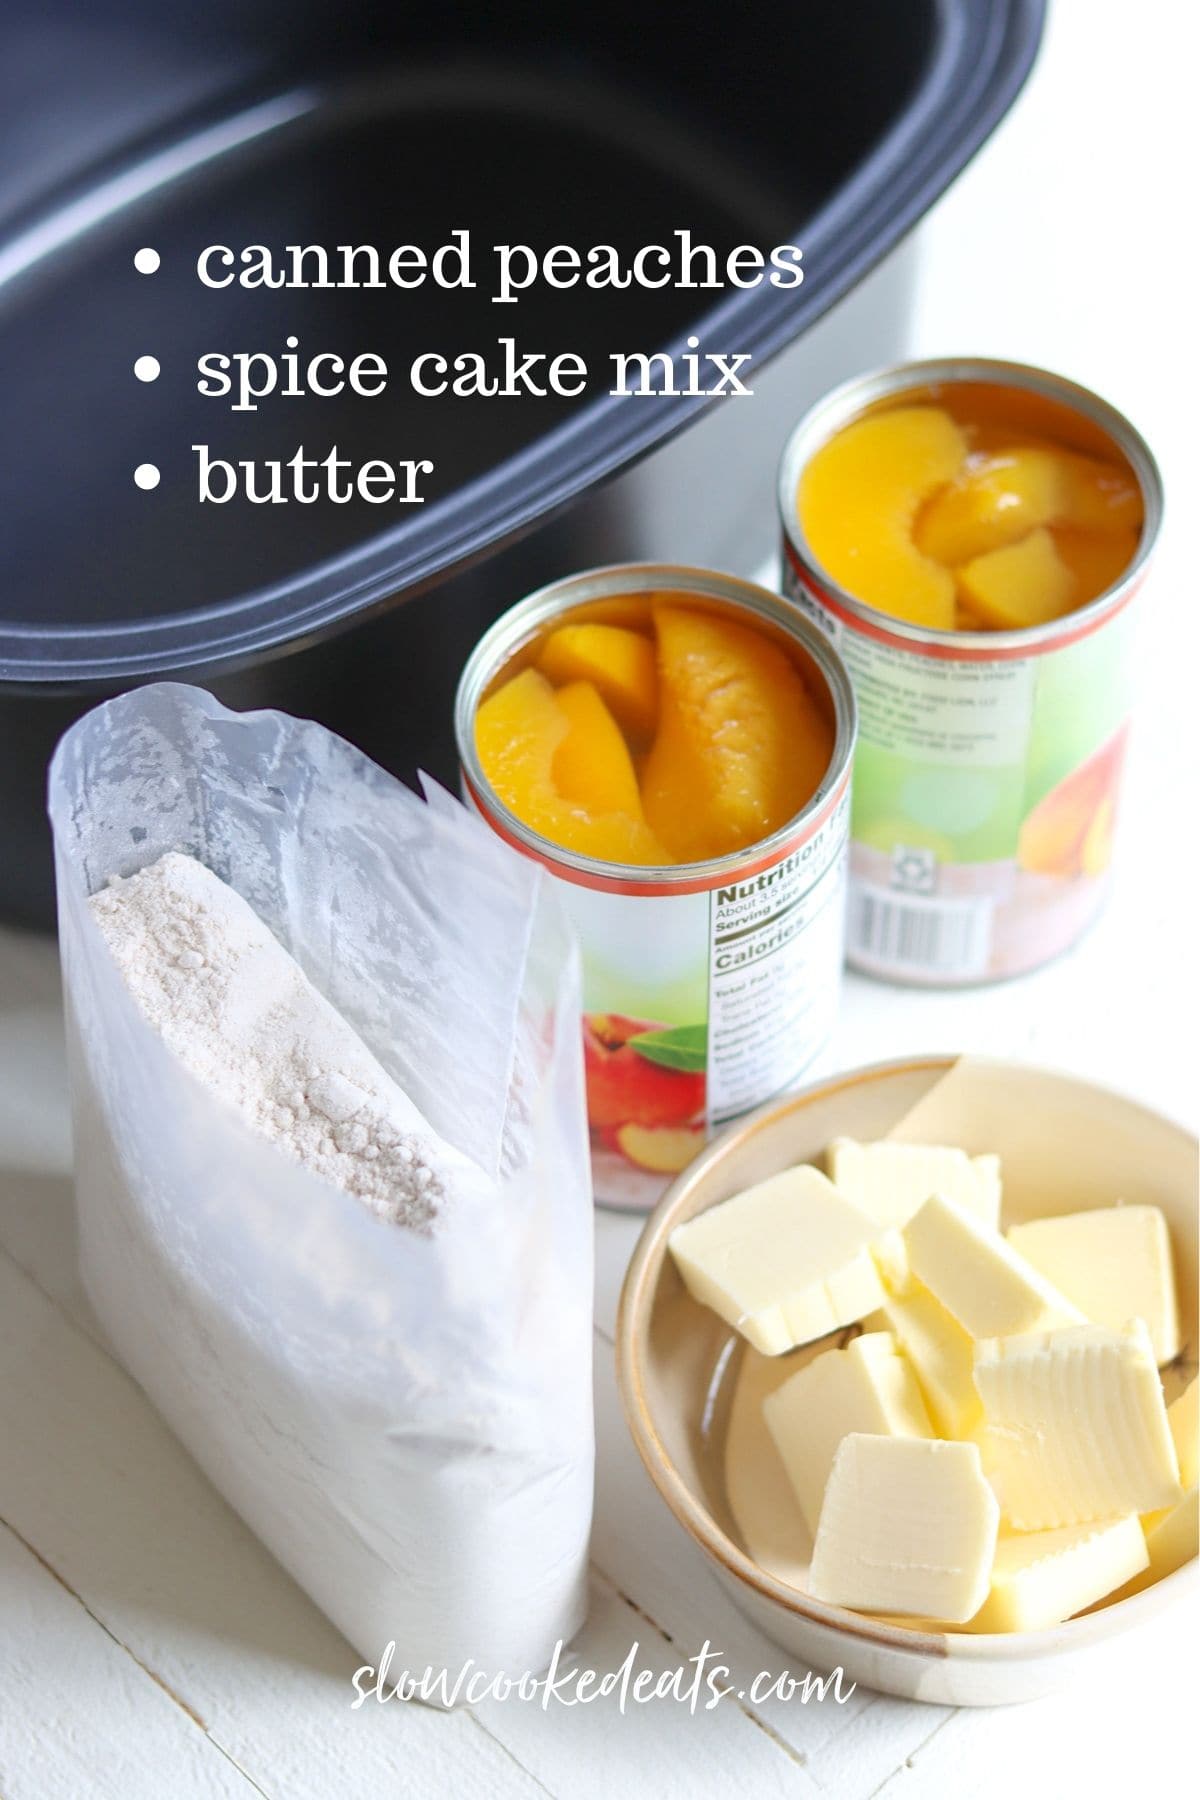 Ingredients for making crock pot peach cobbler